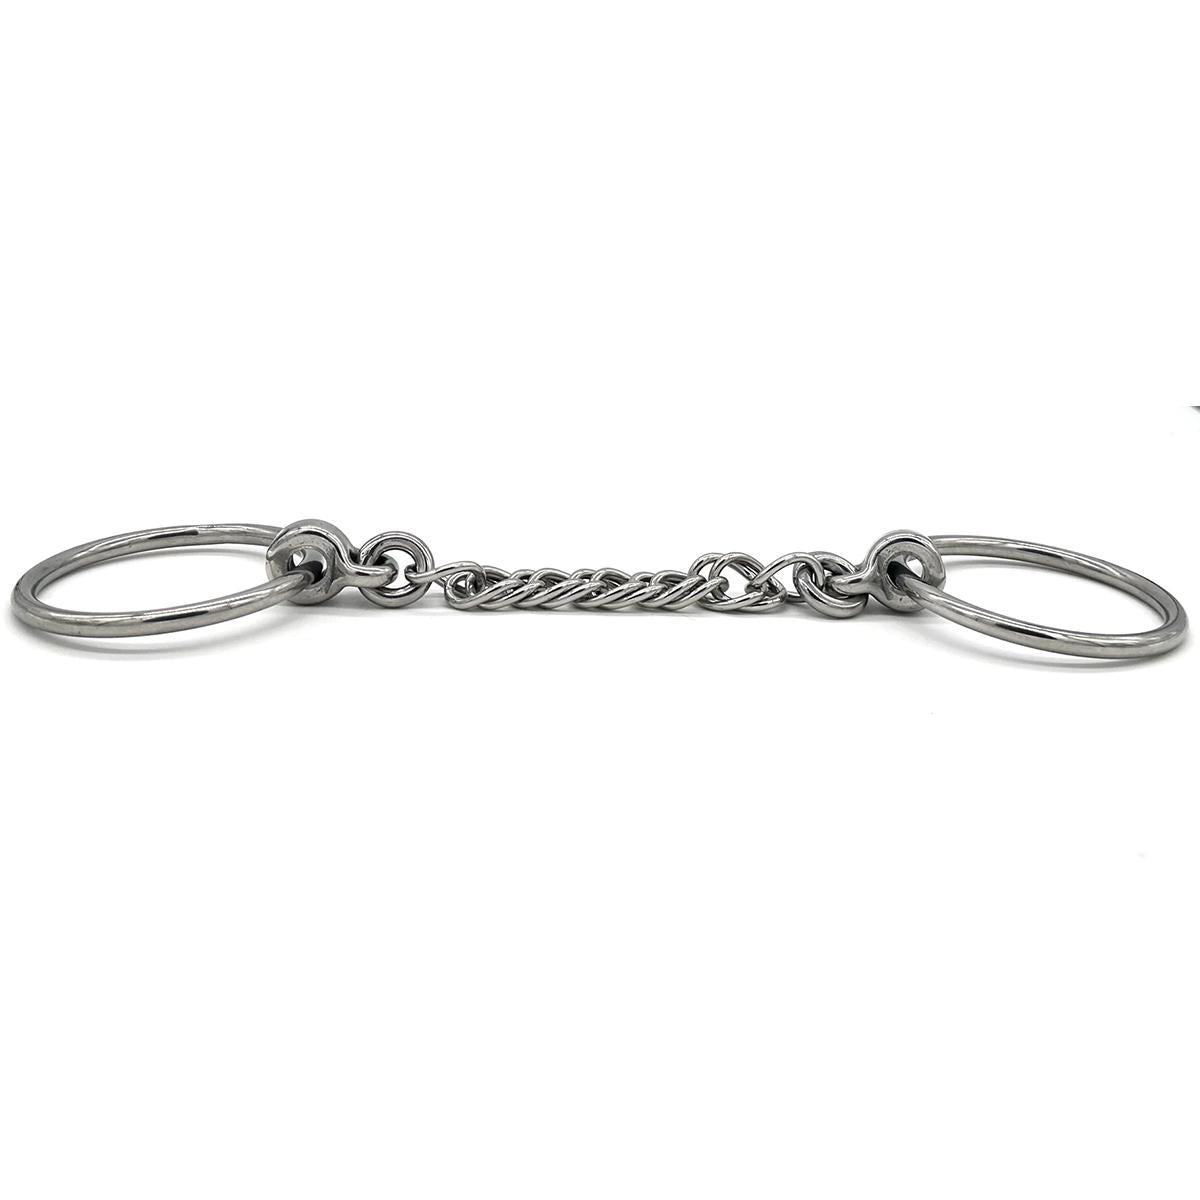 AJR Curb Chain Loose Ring Bit